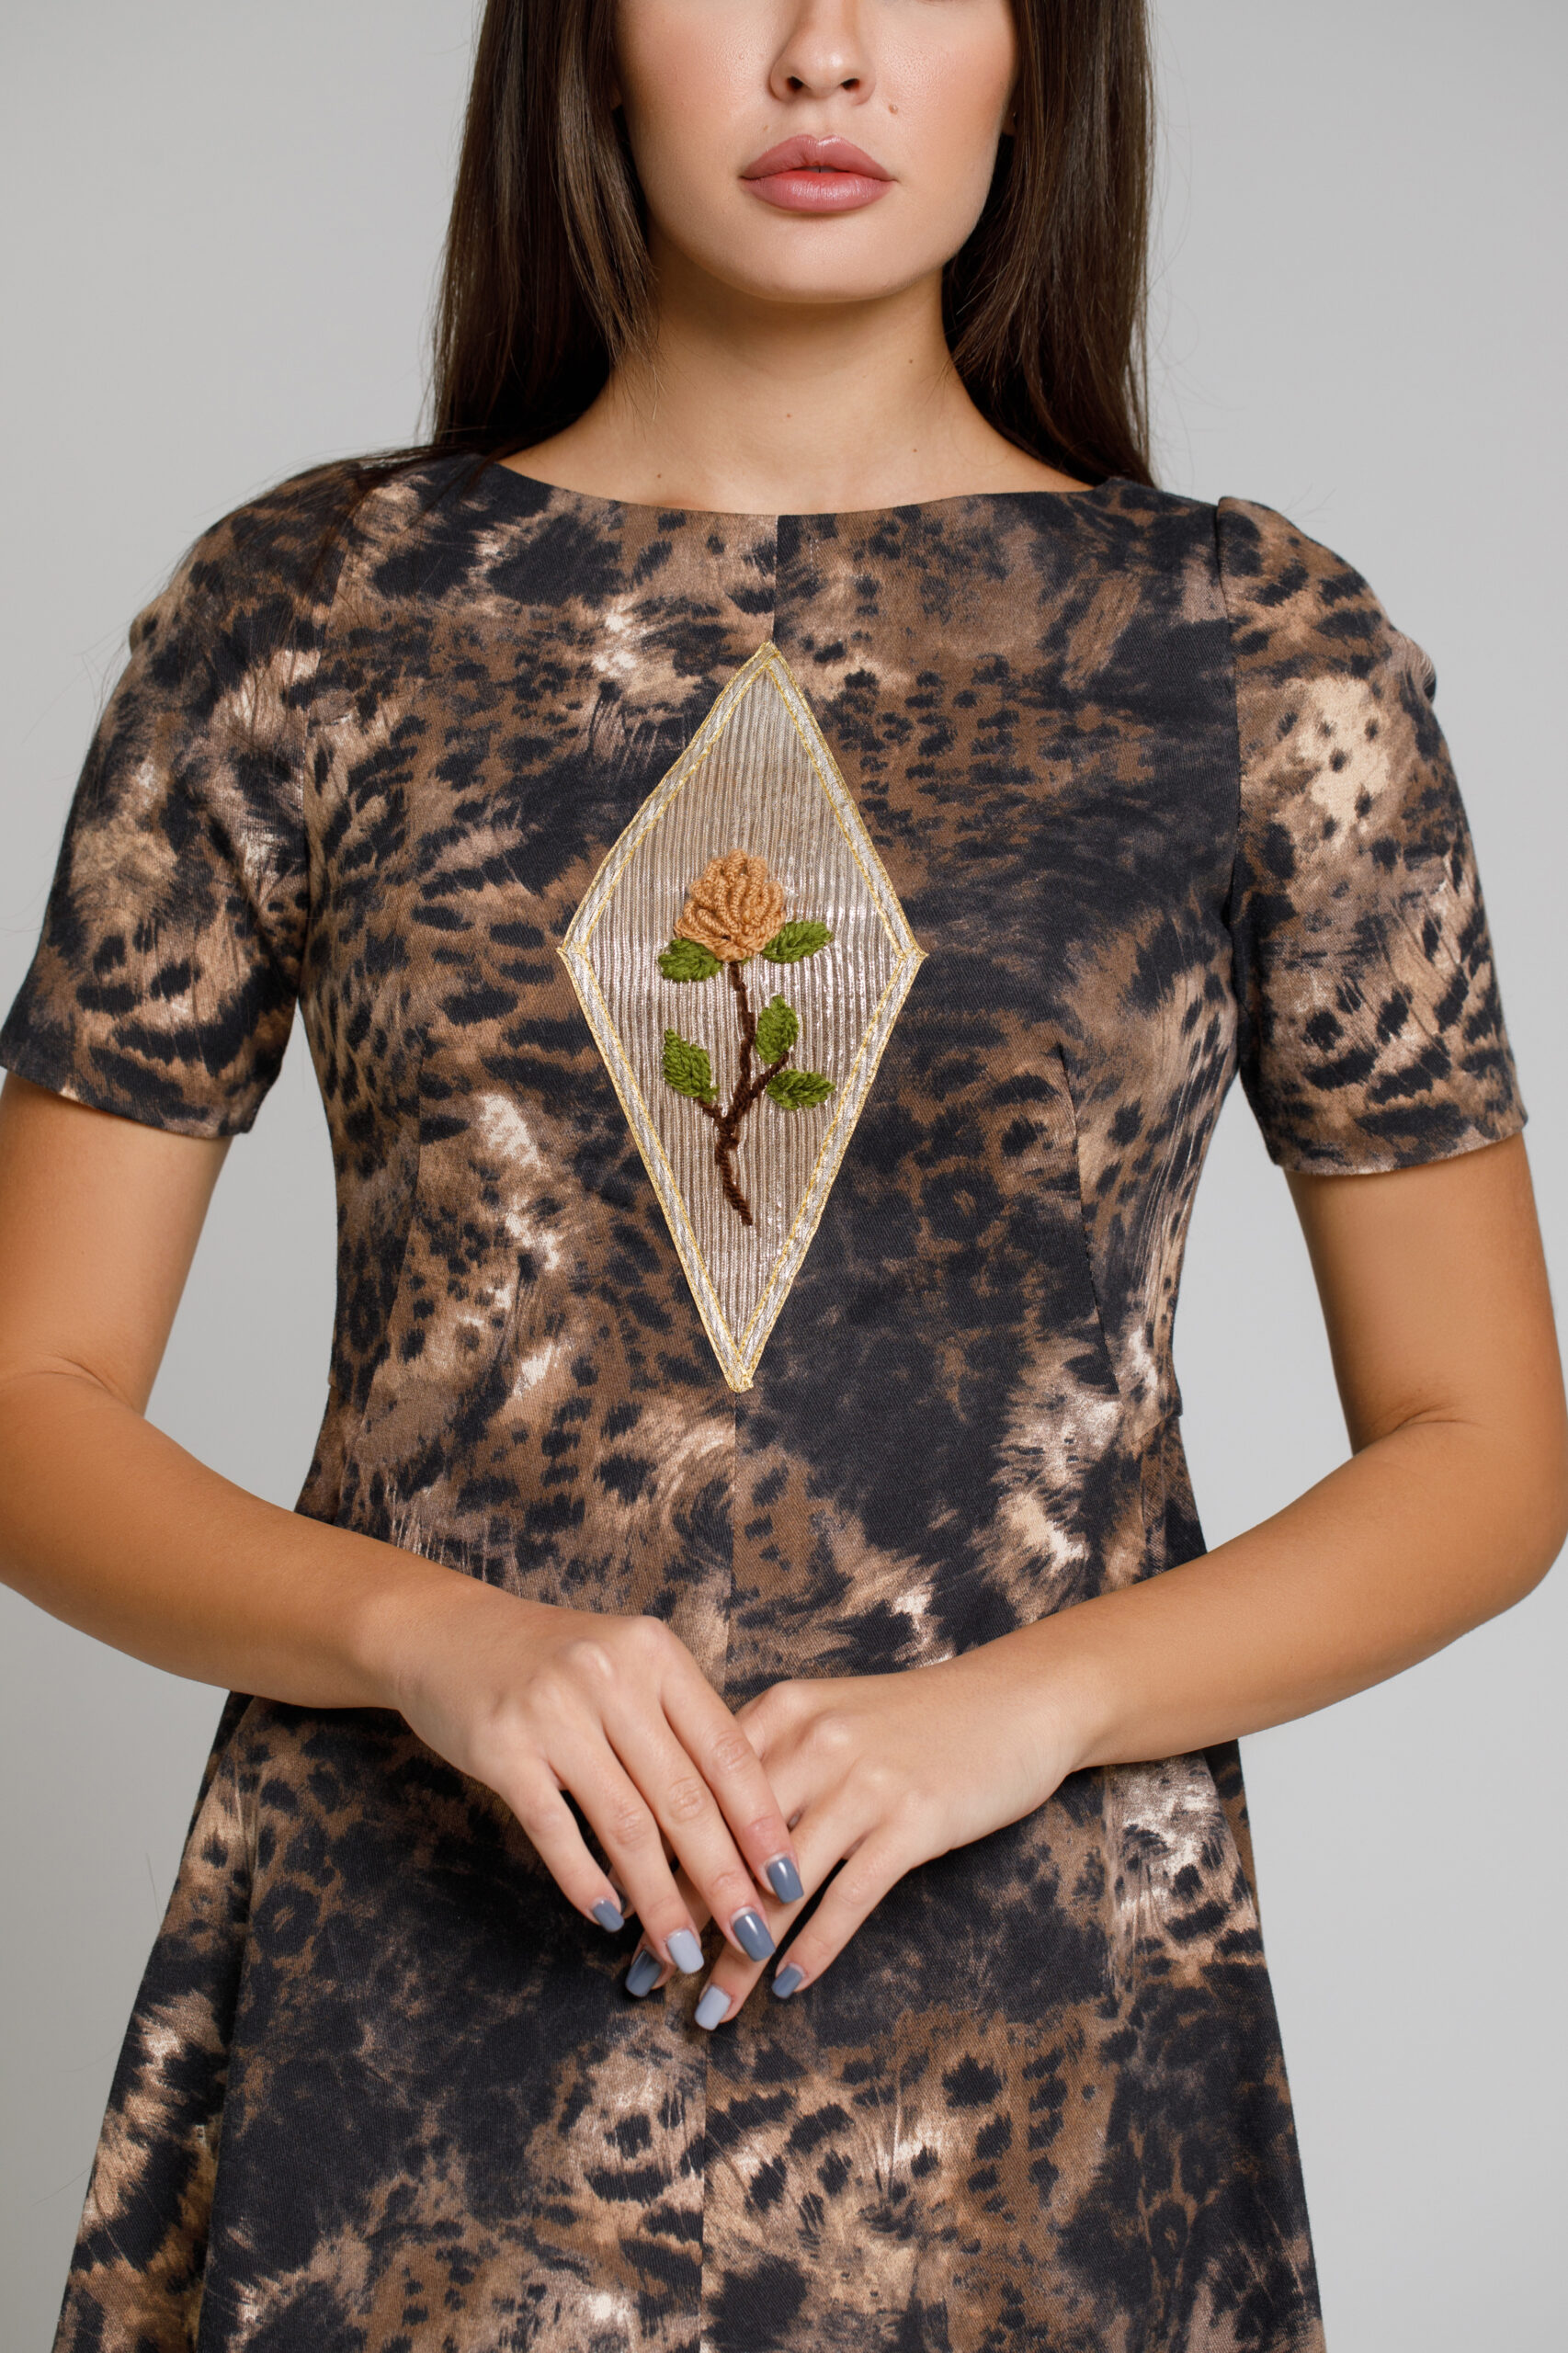 IMMA dress in animal print. Natural fabrics, original design, handmade embroidery